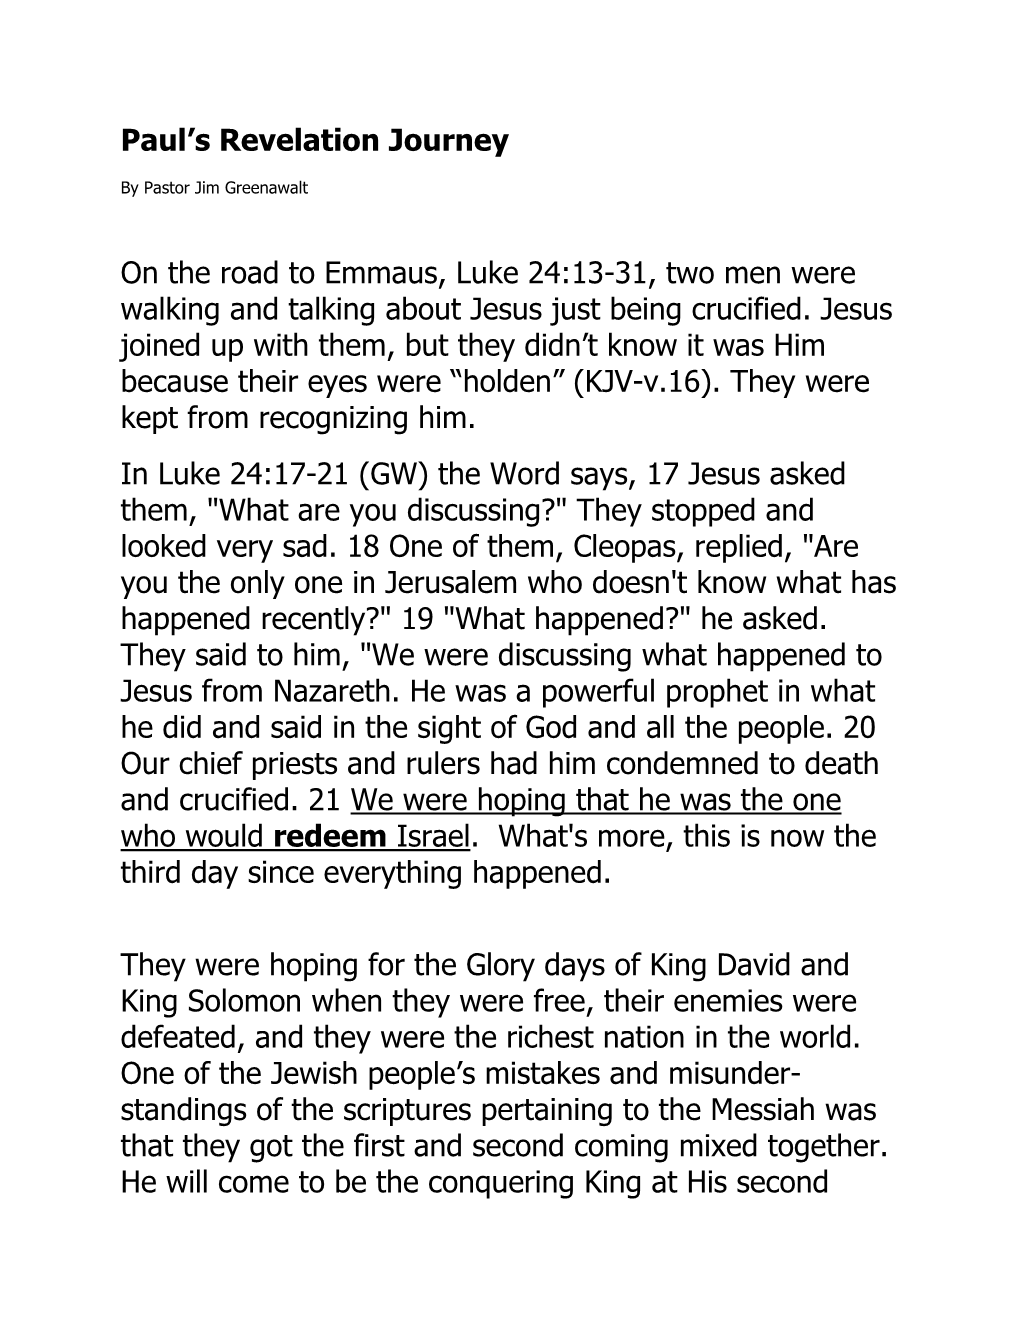 Paul's Revelation Journey on the Road to Emmaus, Luke 24:13-31, Two